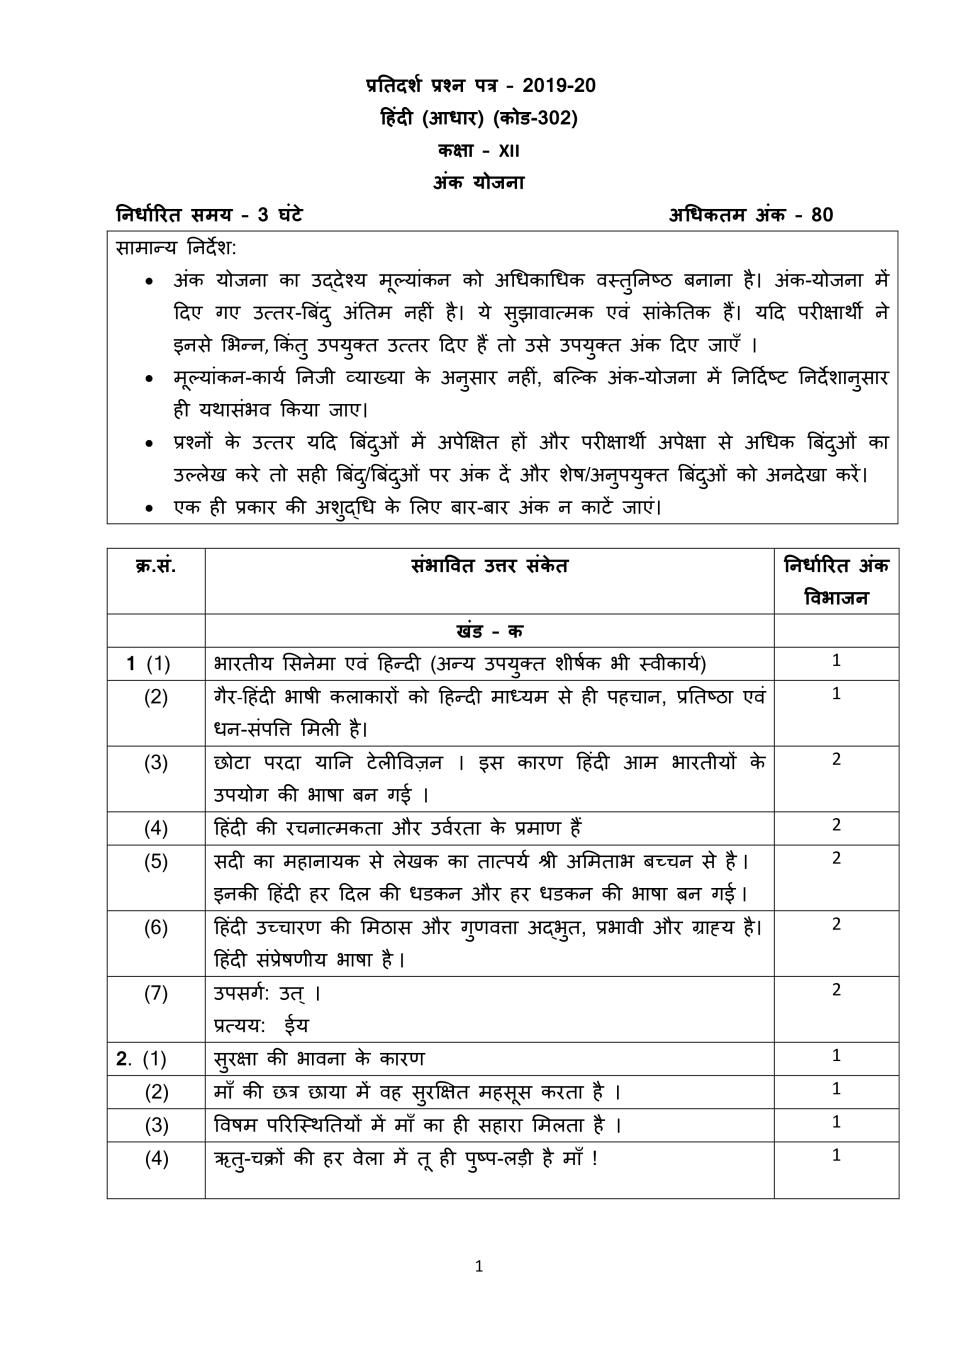 CBSE Class 12 Marking Scheme 2020 for Hindi Core - Page 1